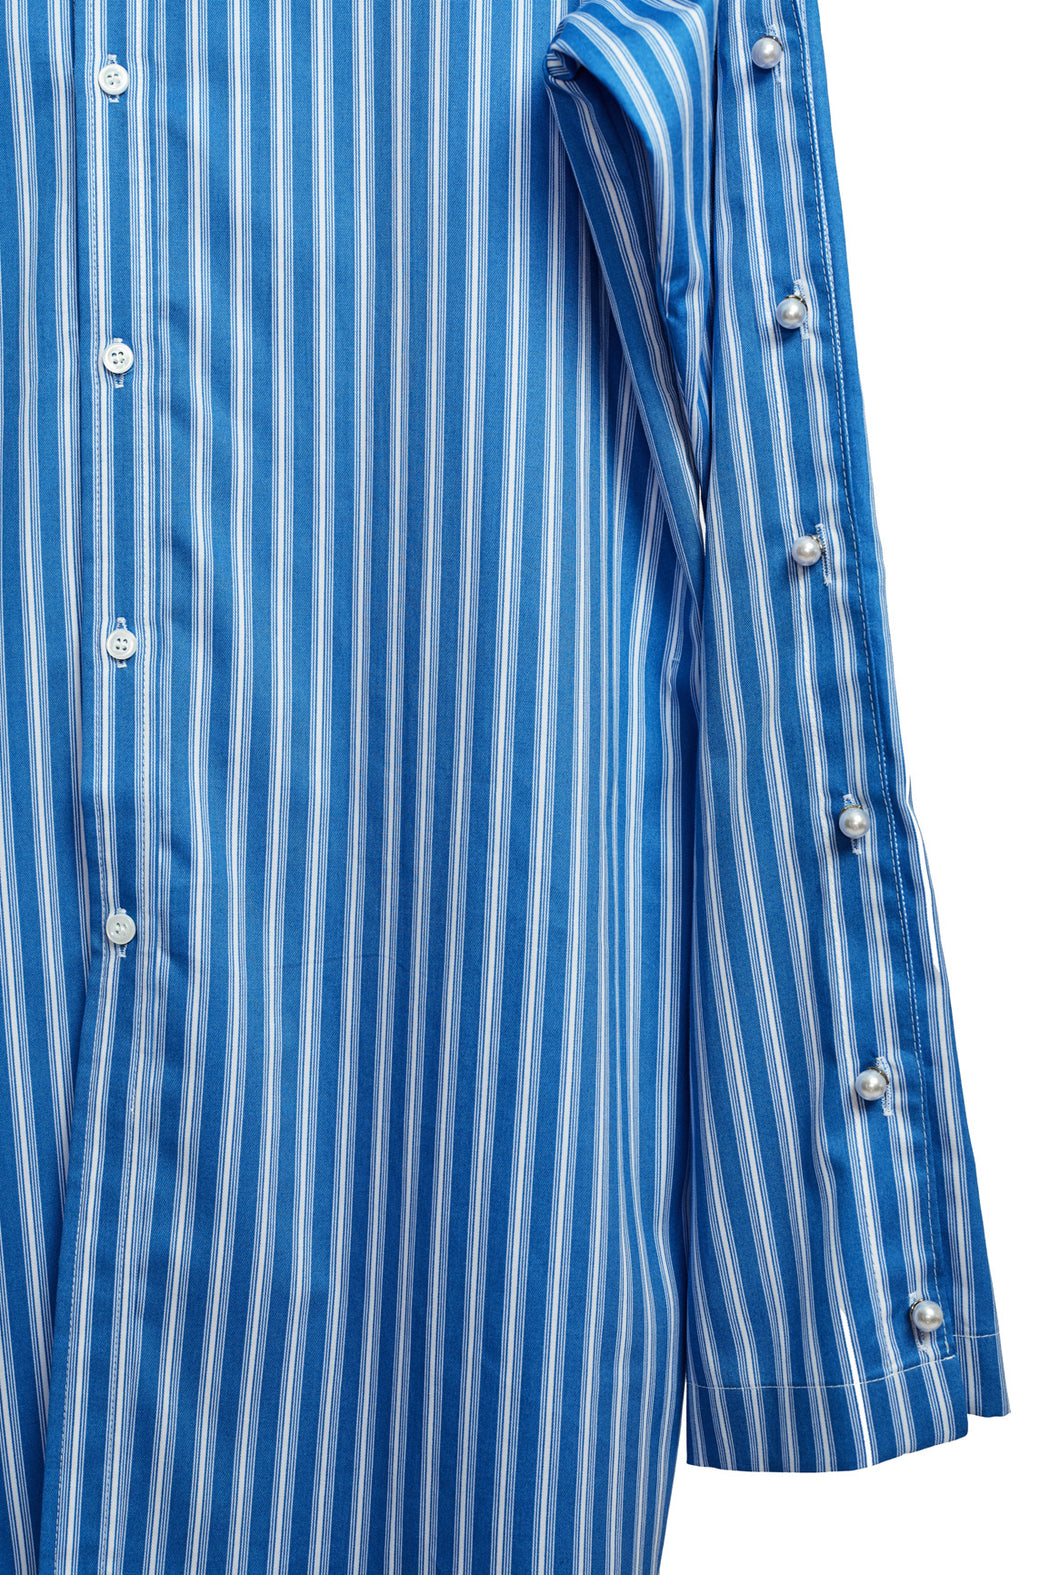 Button Up Pearl Shirt - Stripe Blue